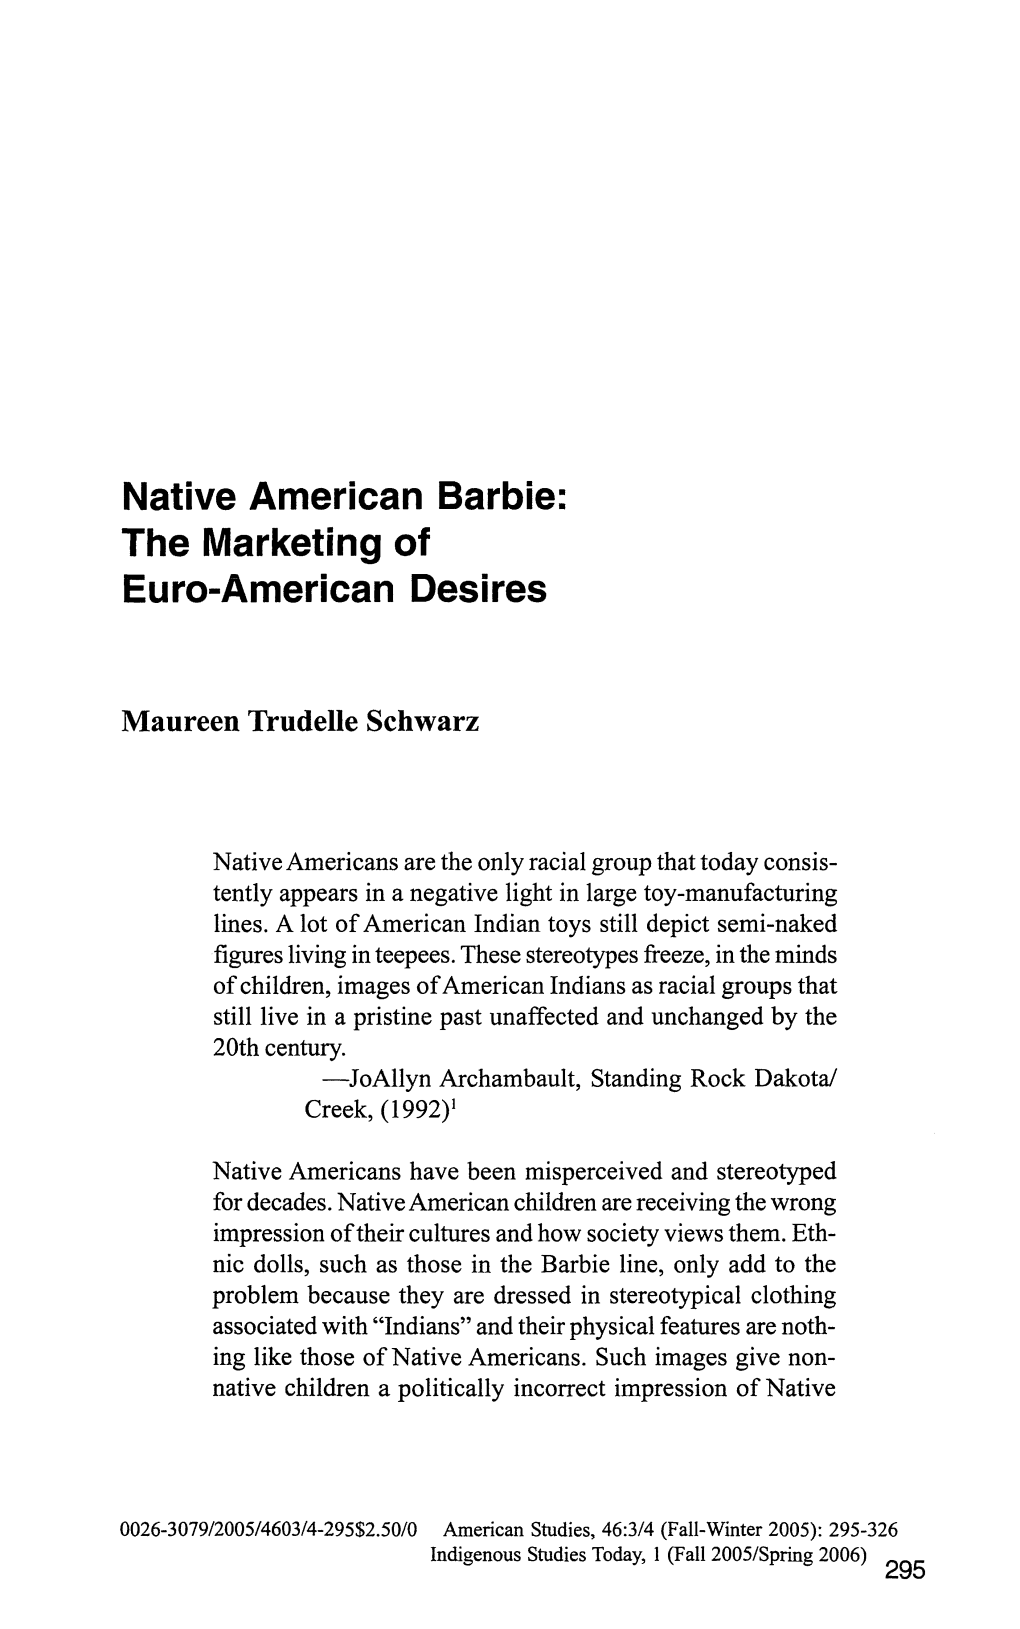 Native American Barbie: the Marketing of Euro-American Desires